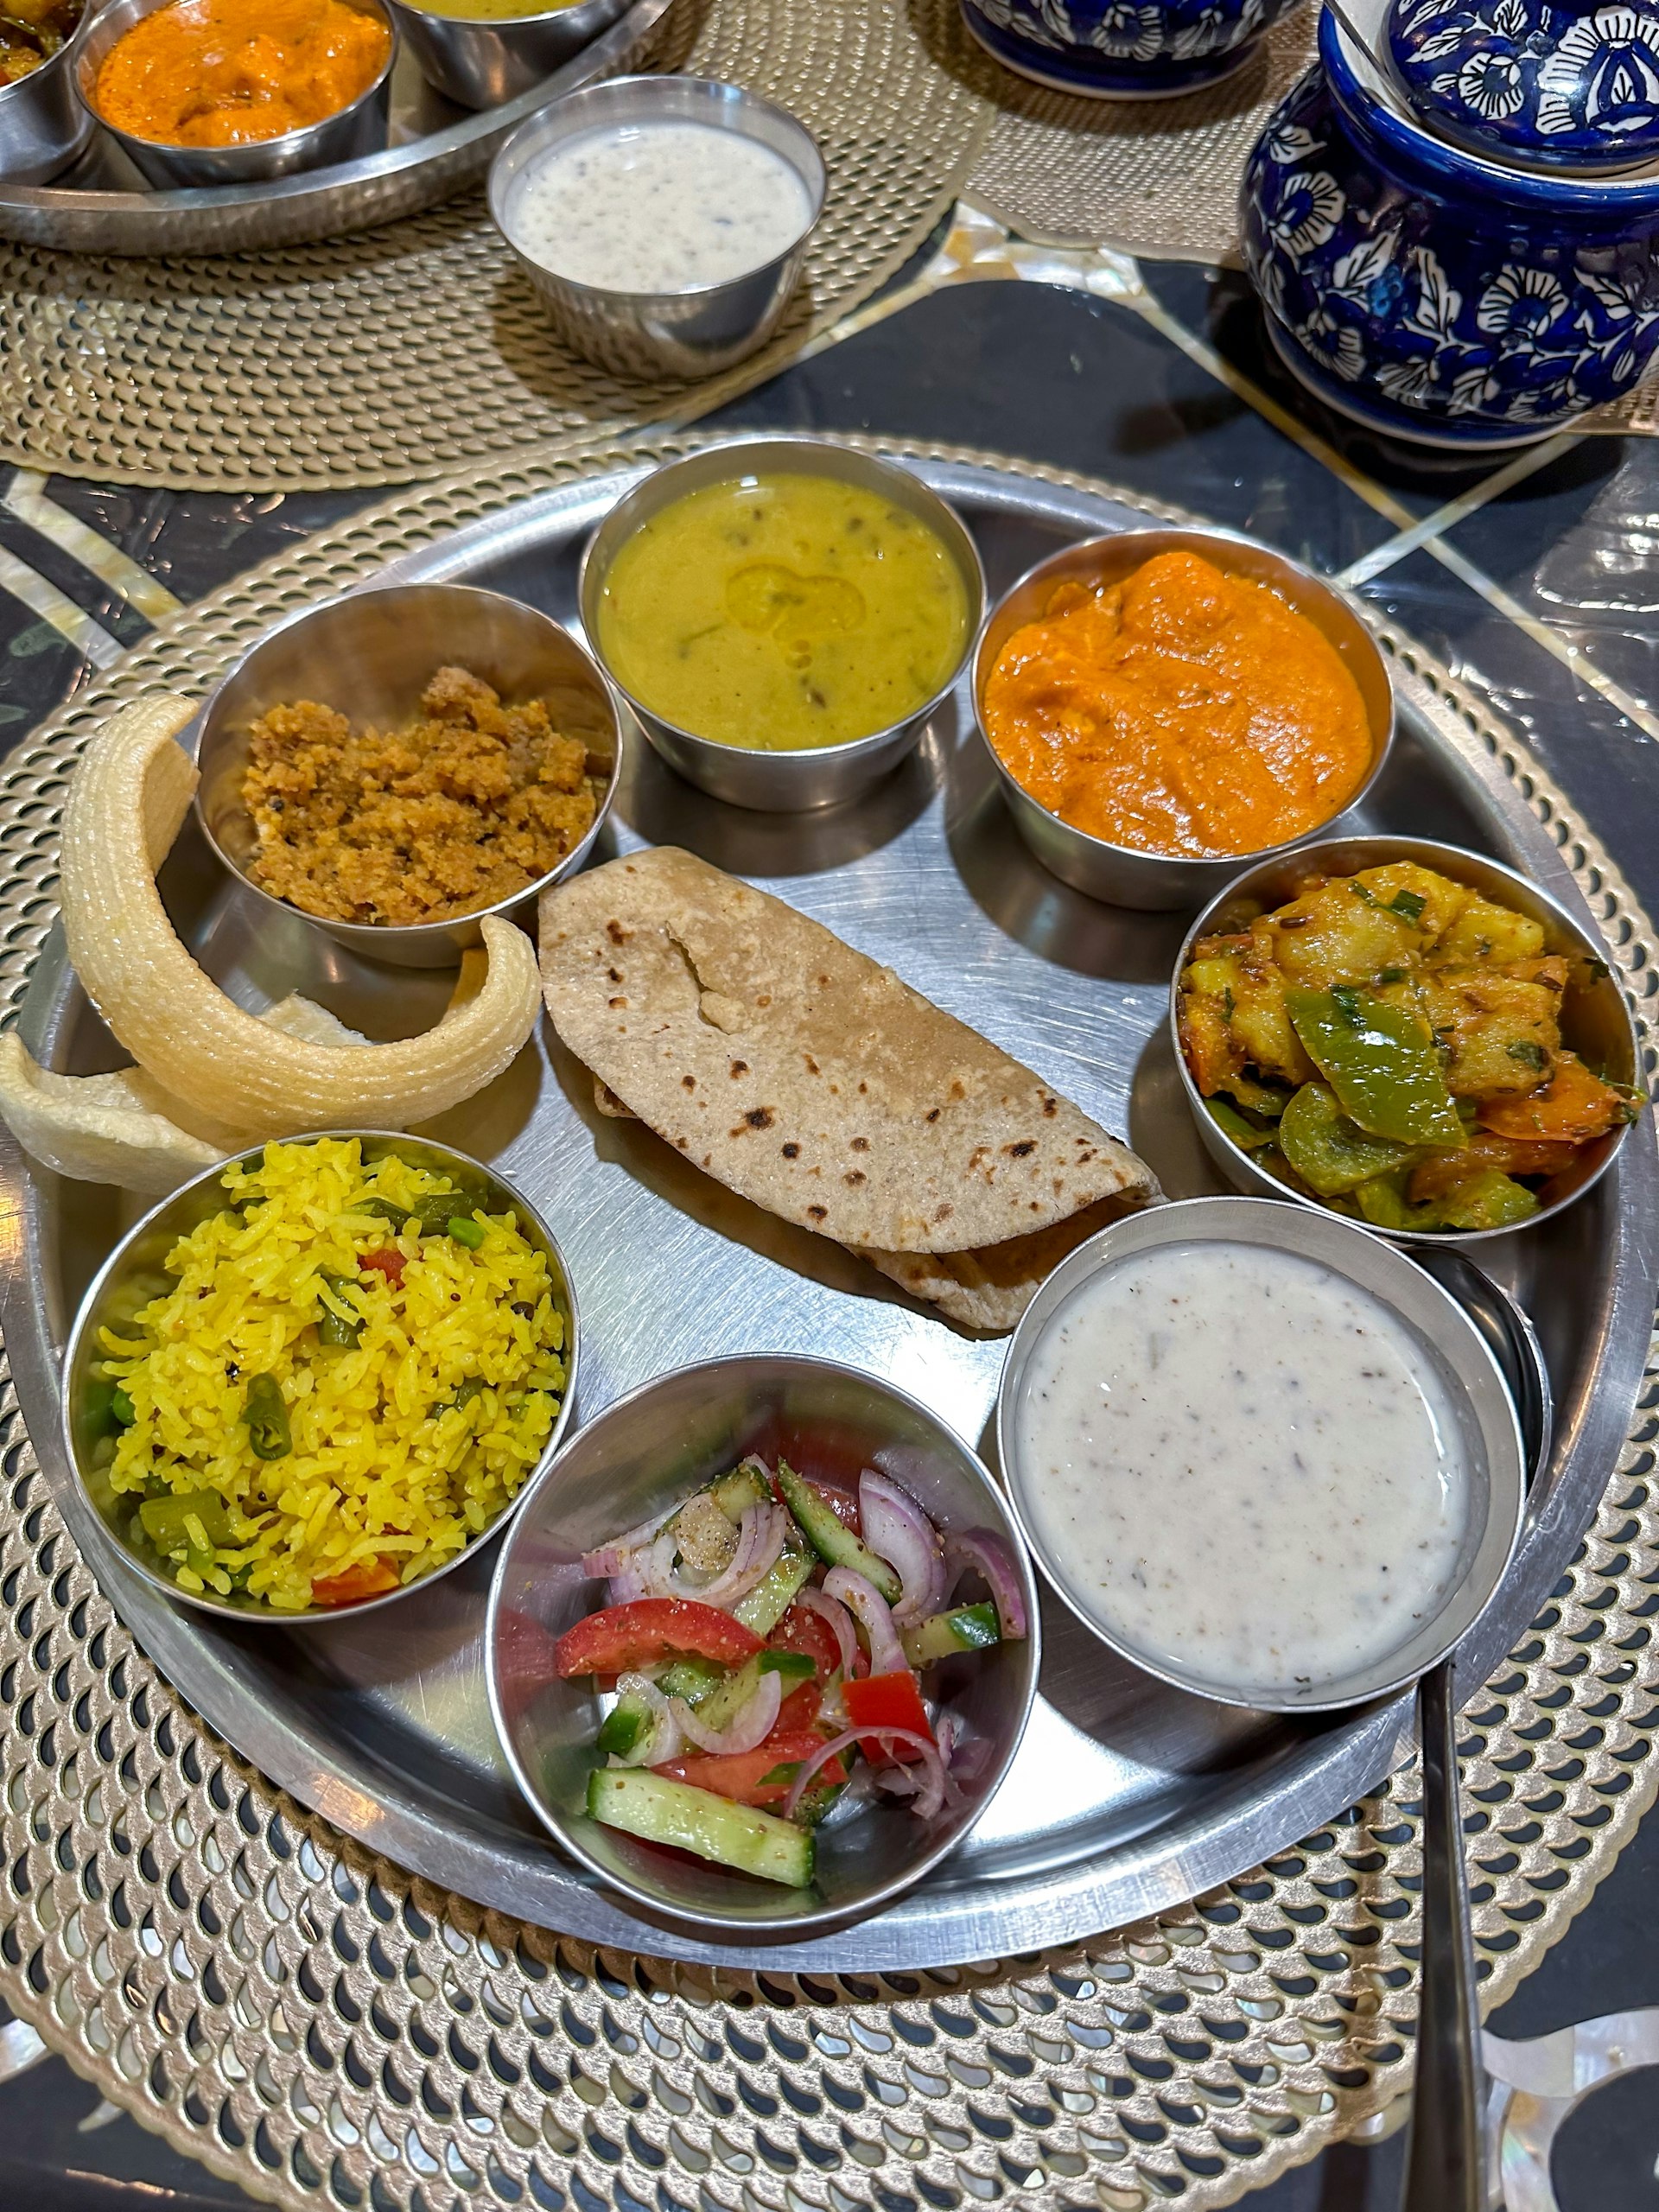 Indian thali meal. Indian food from Jaipur - Rajasthani Thali